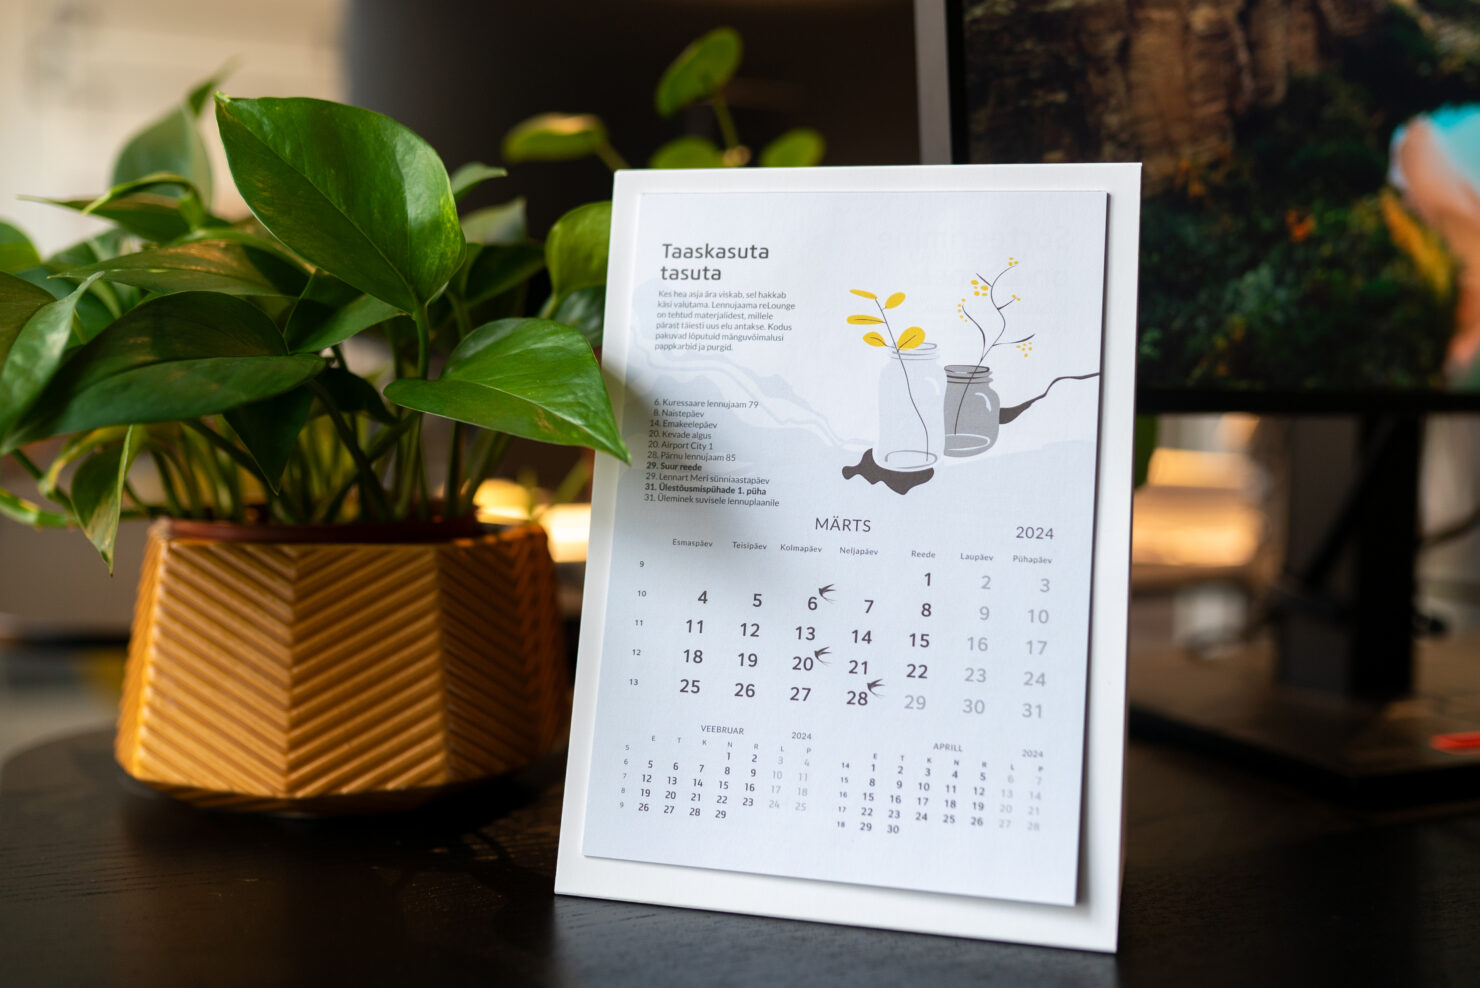 A table-calendar next to a plant